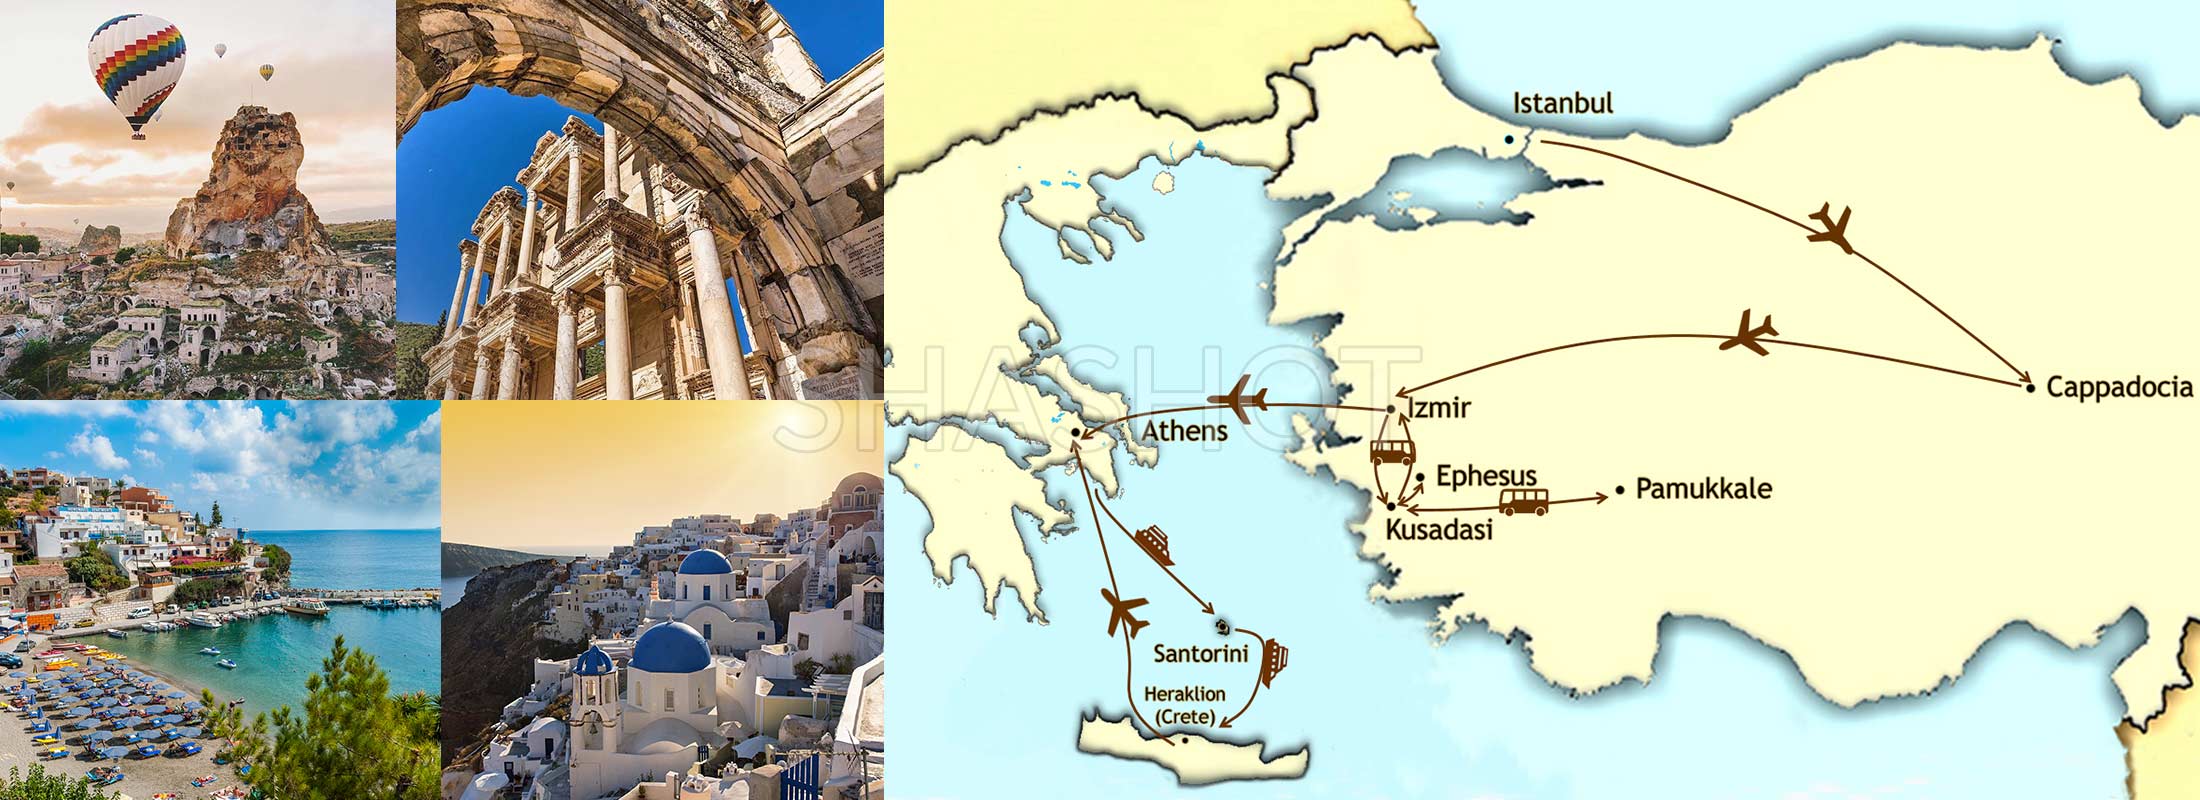 crete-heraklion-greece-turkey-package-tours